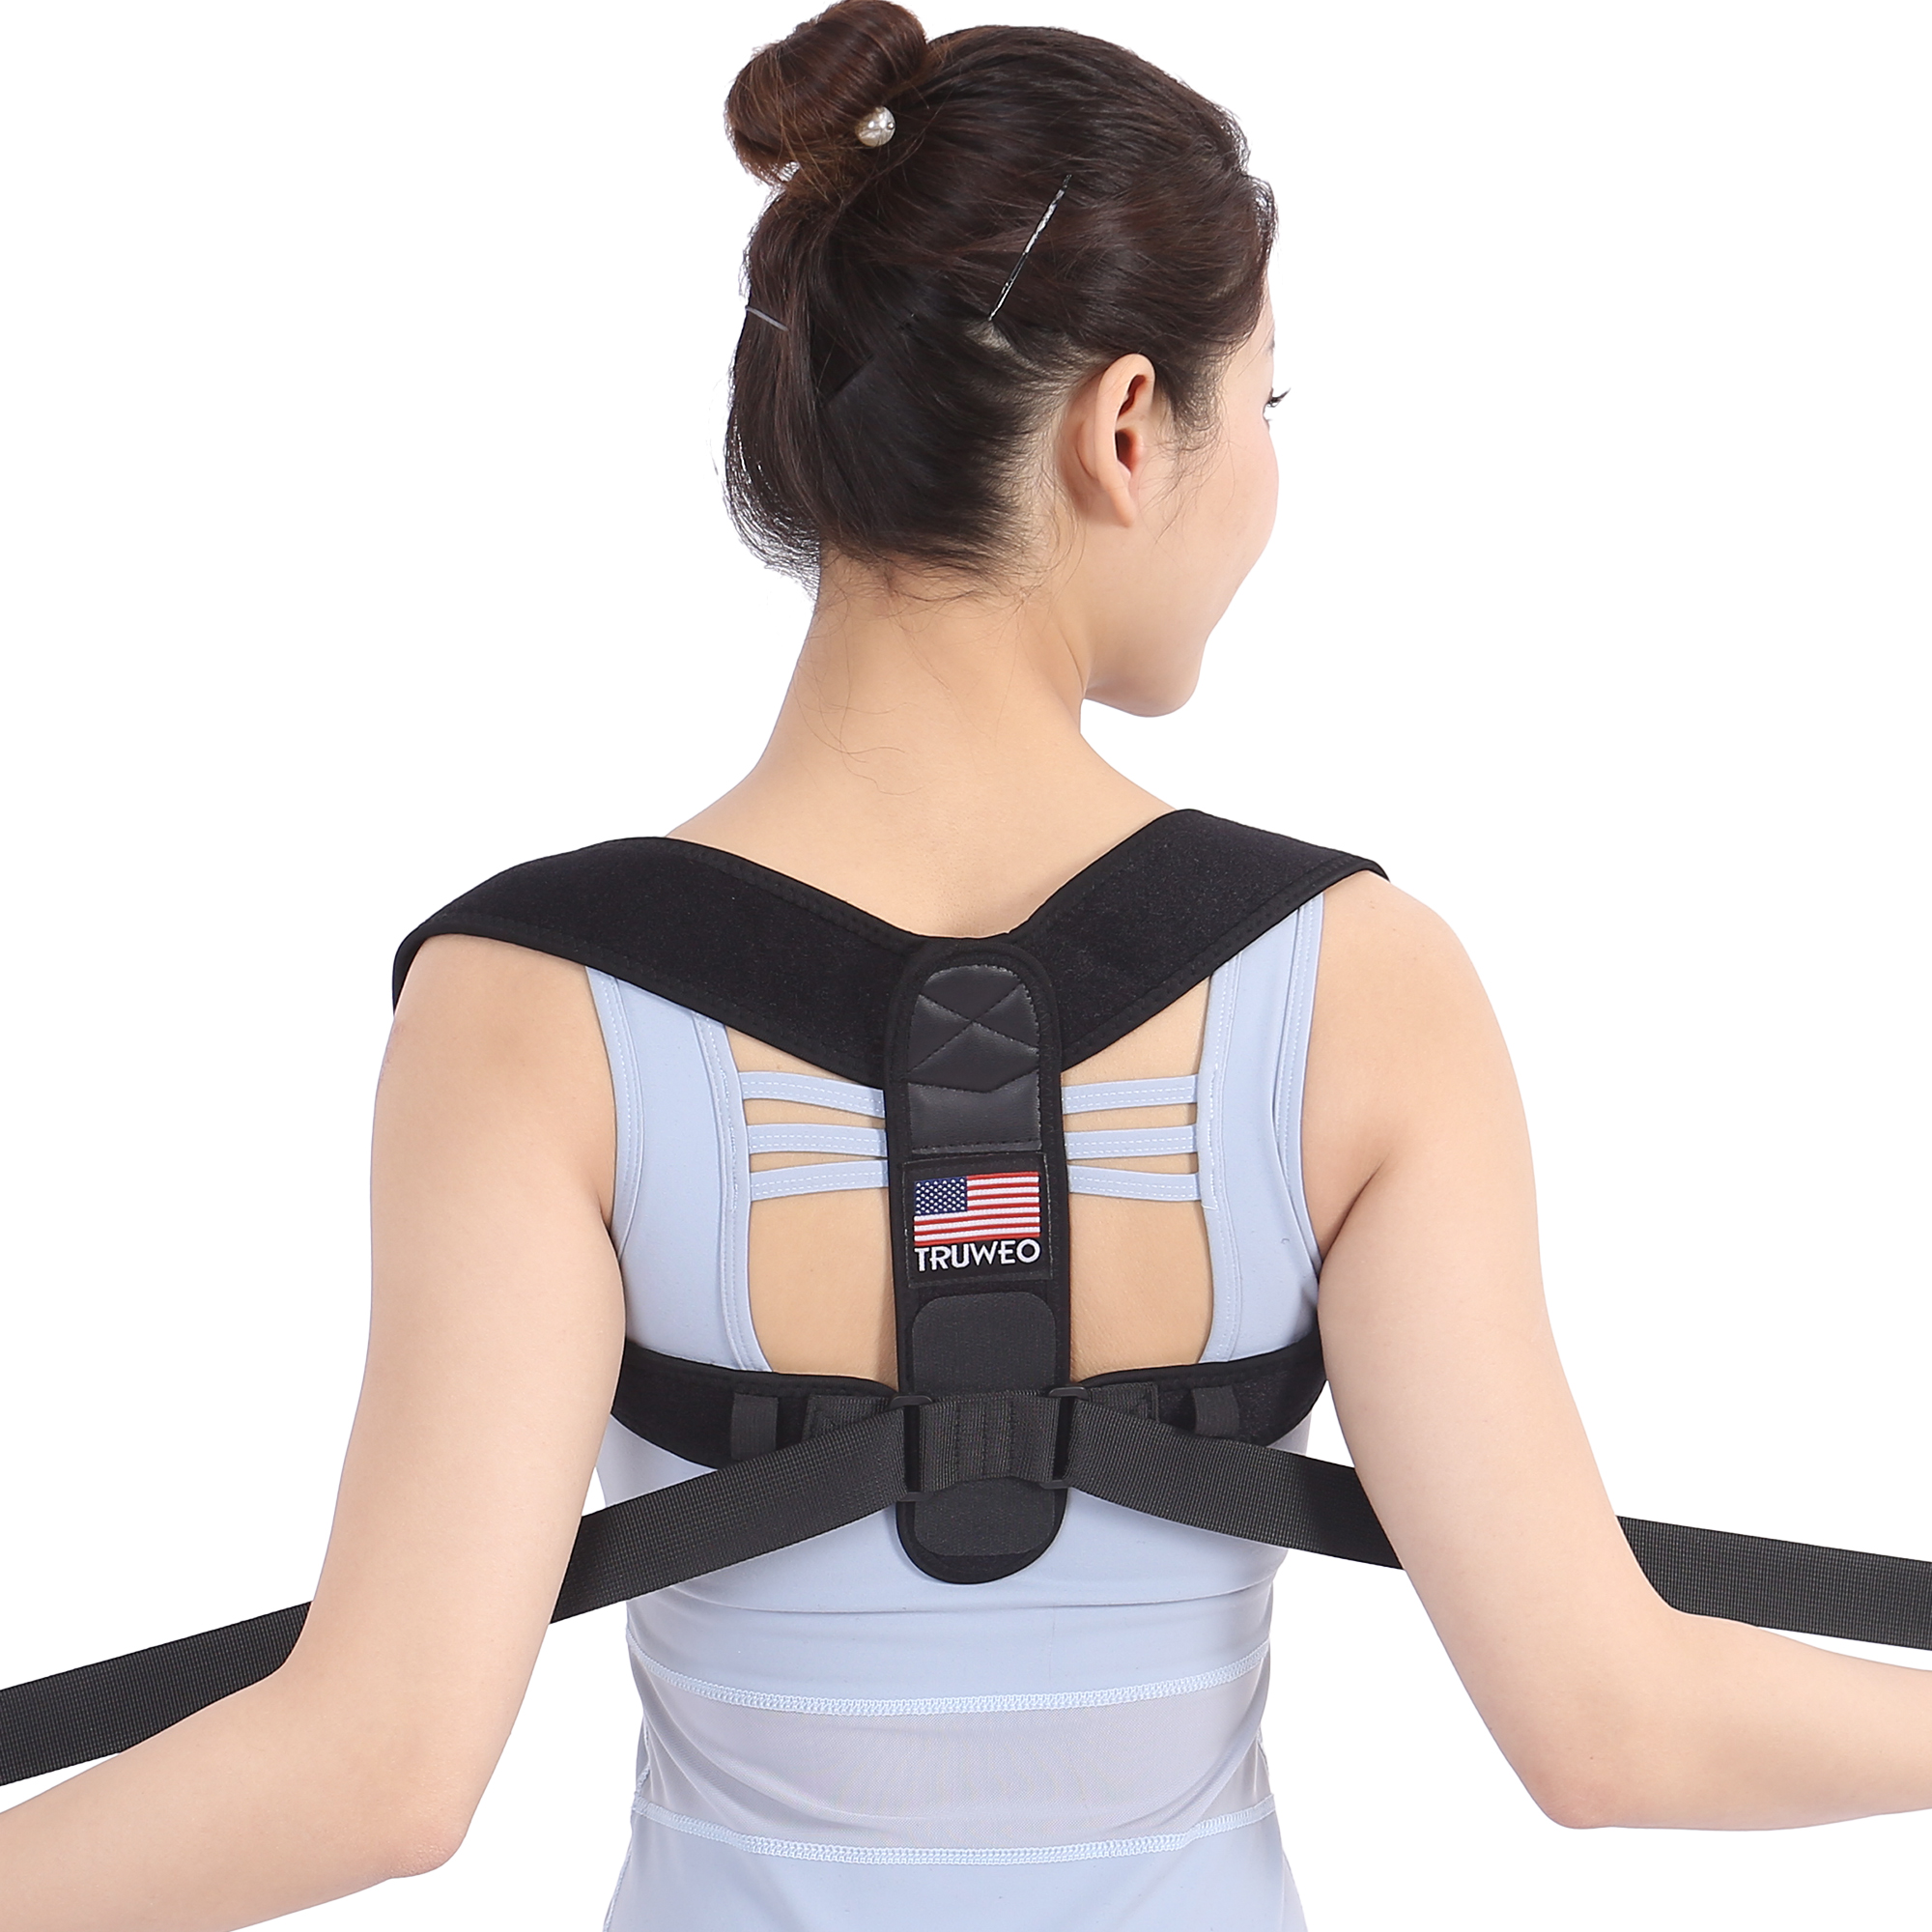 Ferstelbere Posture Corrector Clavicle Brace Back Support ademend Back Brace